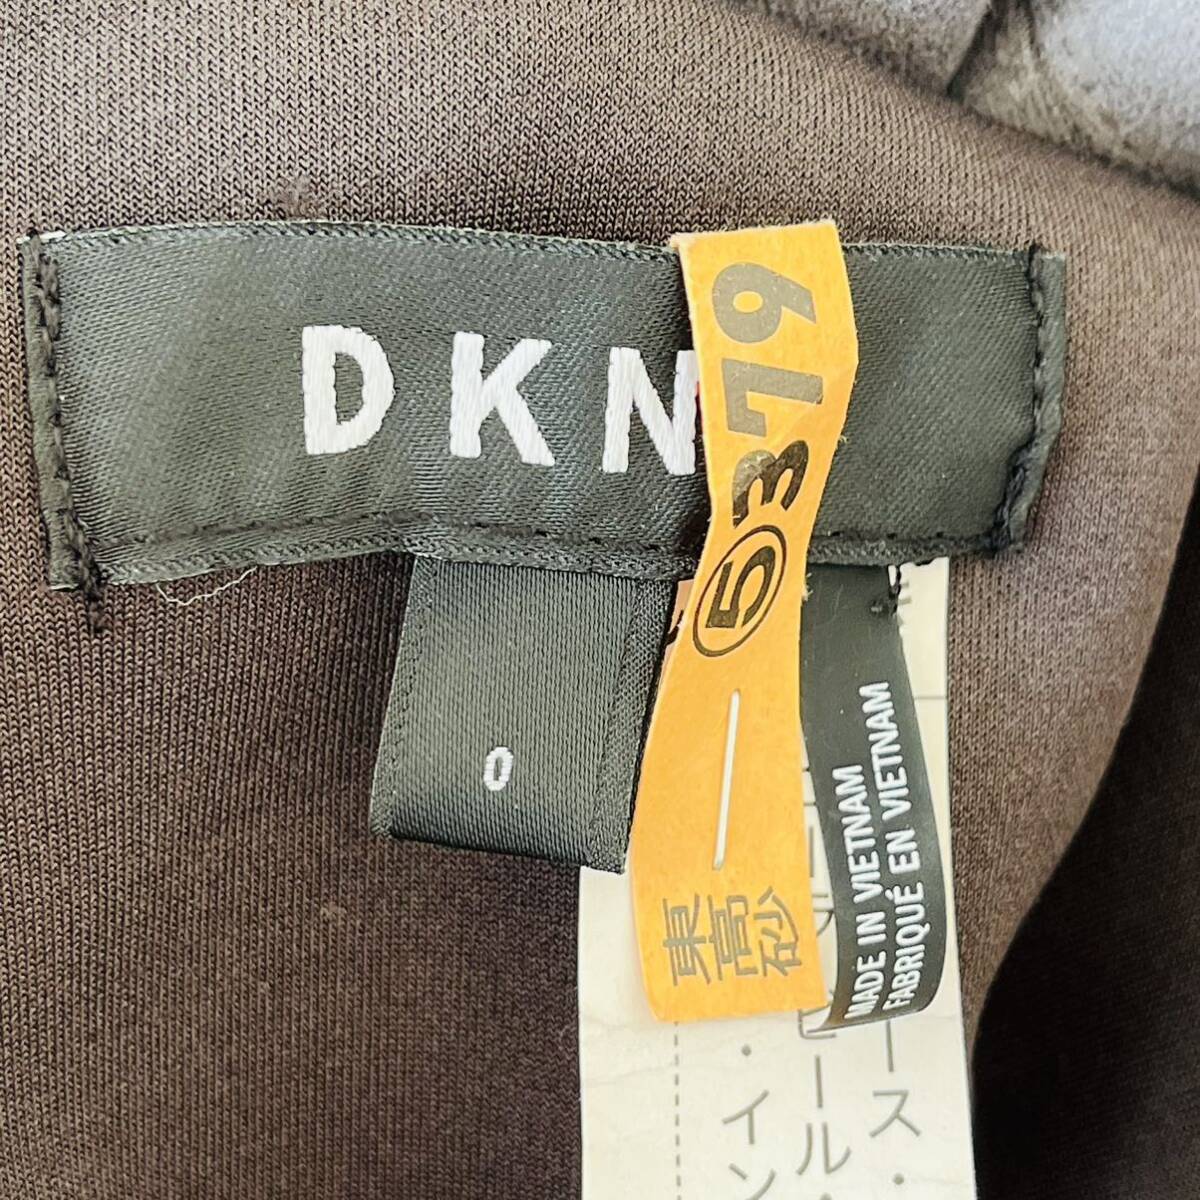 H7135cc DKNY Donna Karan New York безрукавка One-piece 0(S размер ранг ) серый женский замша материалы осень-зима платье б/у одежда 